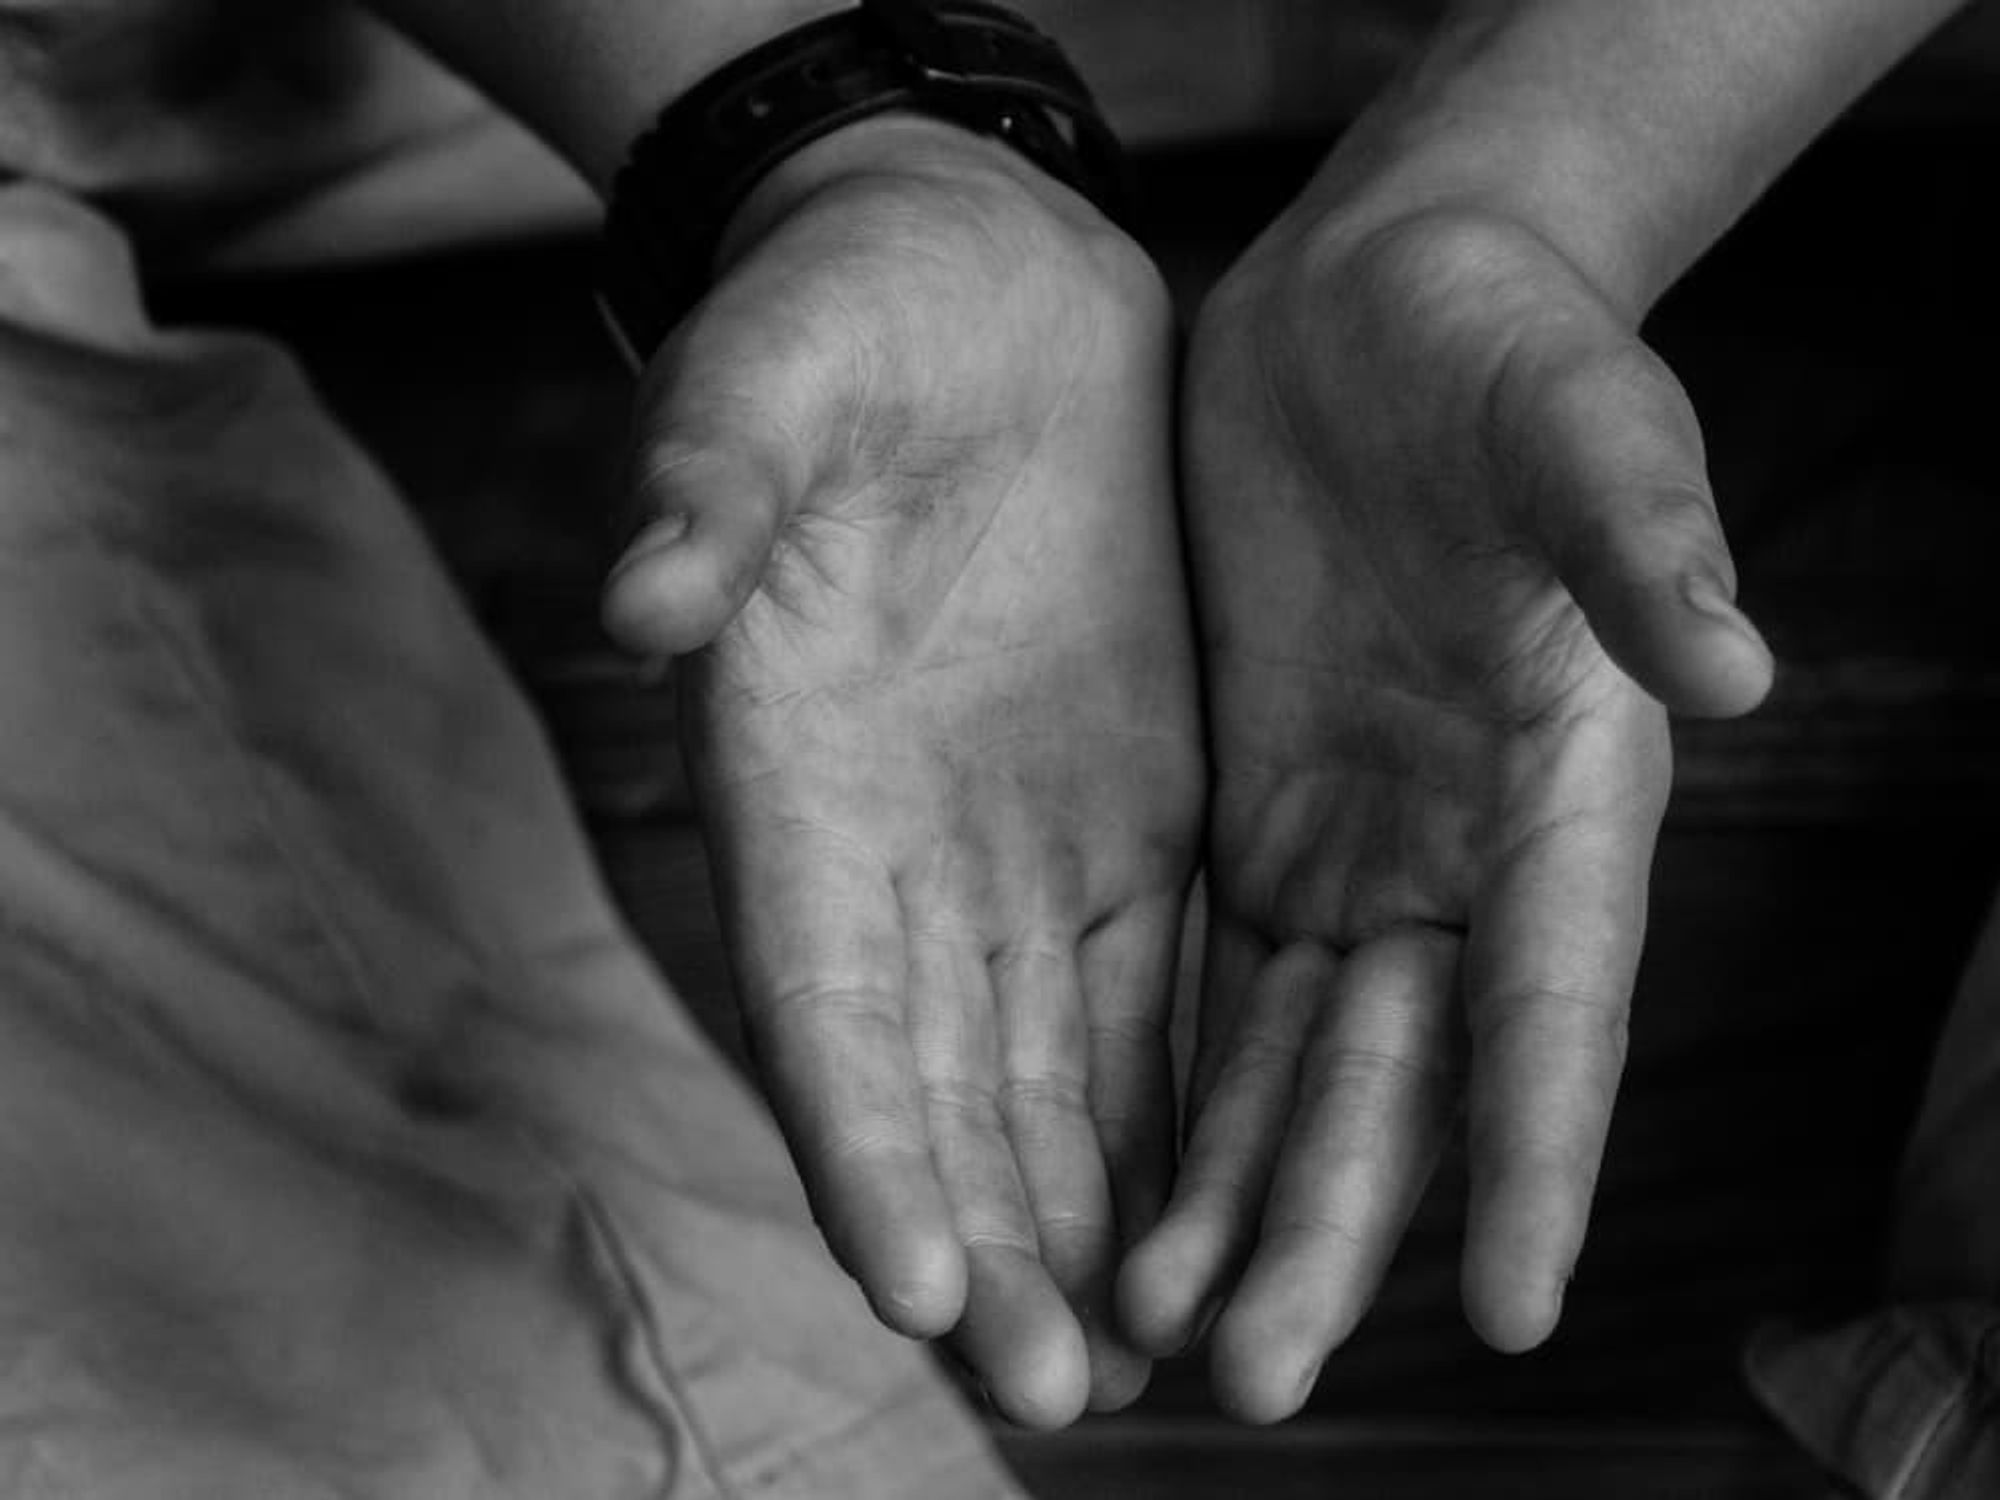 The Children's Shelter San Antonio hands